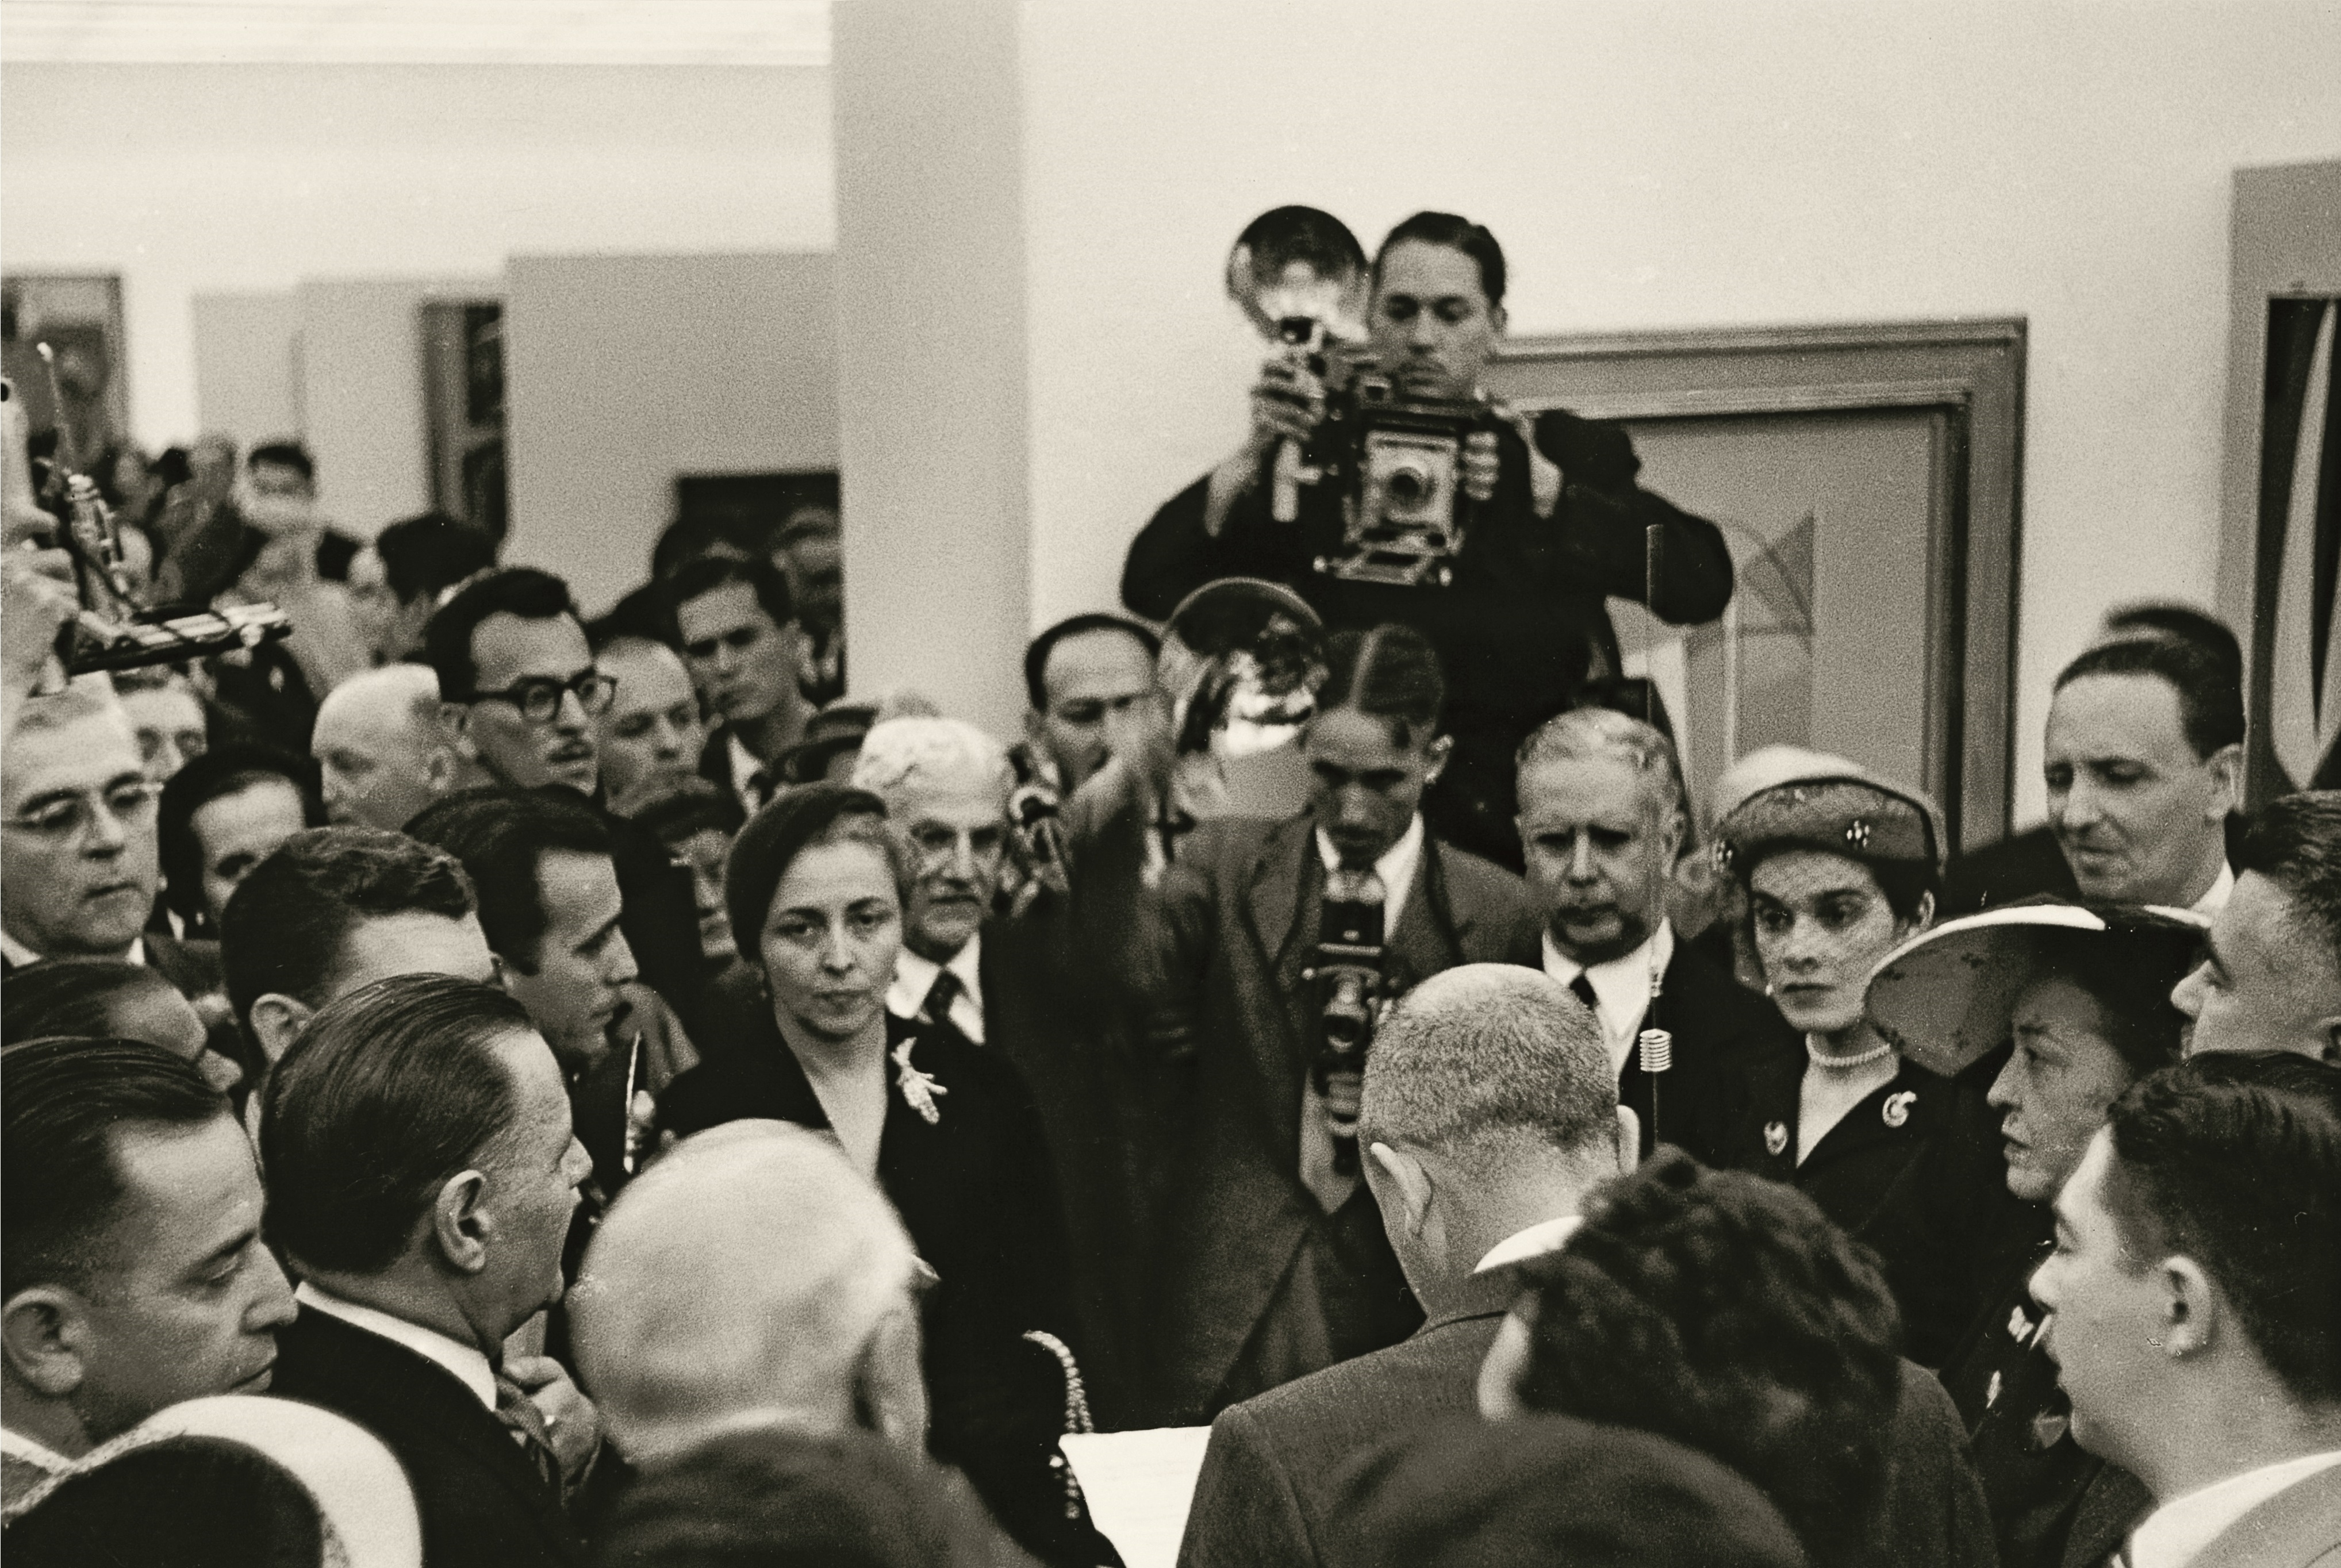 Francisco Matarazzo Sobrinho's speech at the opening on the 1st  Bienal, 1951. With him, Yolanda Penteado, Carmelita Leme Garcez, Darcy Vargas and Lucas Nogueira Garcez.